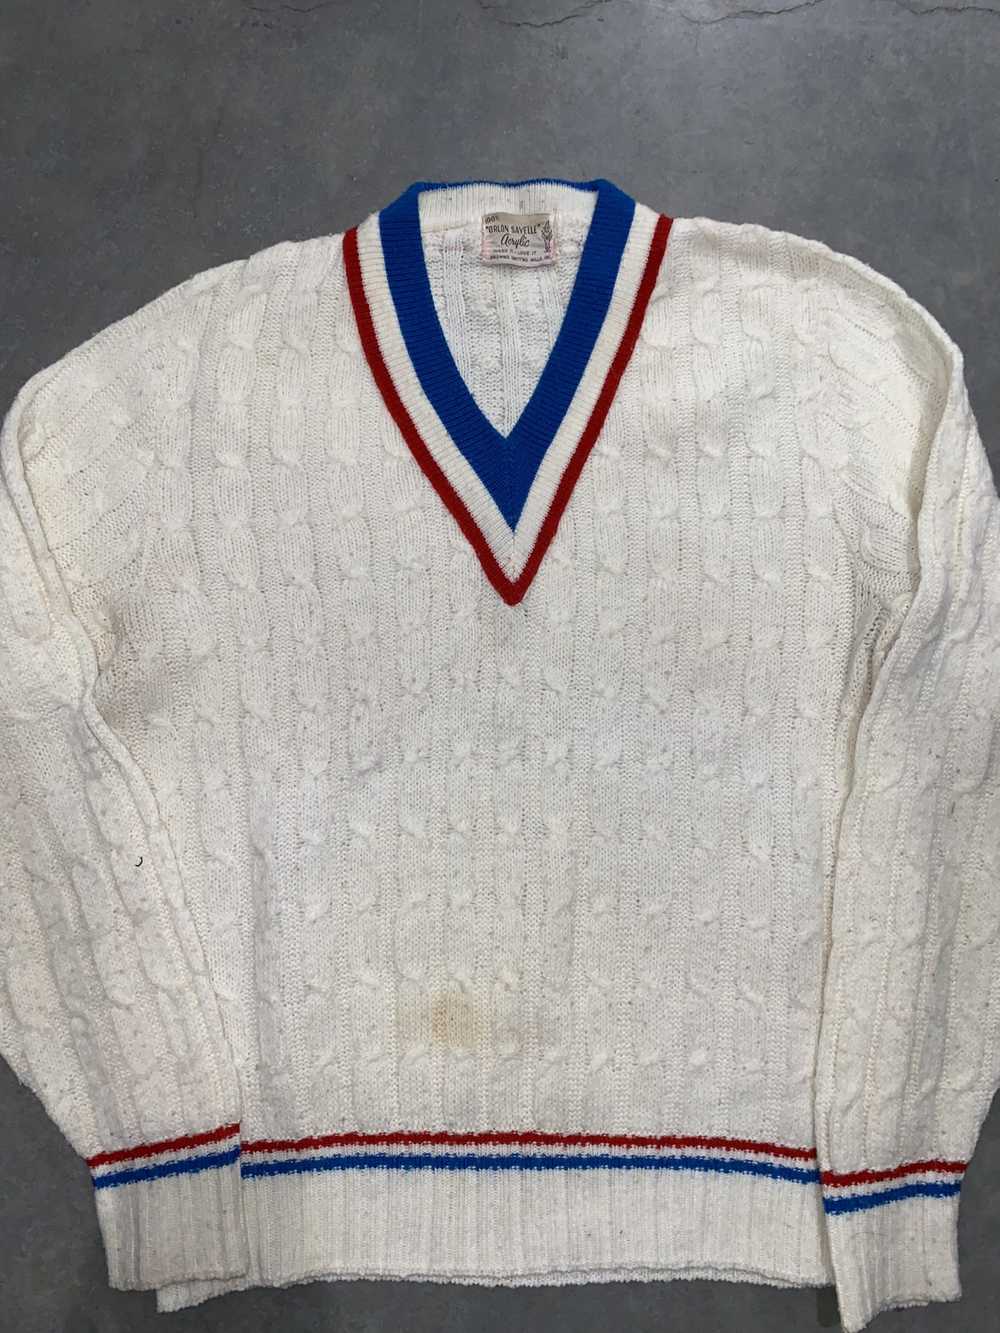 Vintage Vintage 70S Sweater - image 2